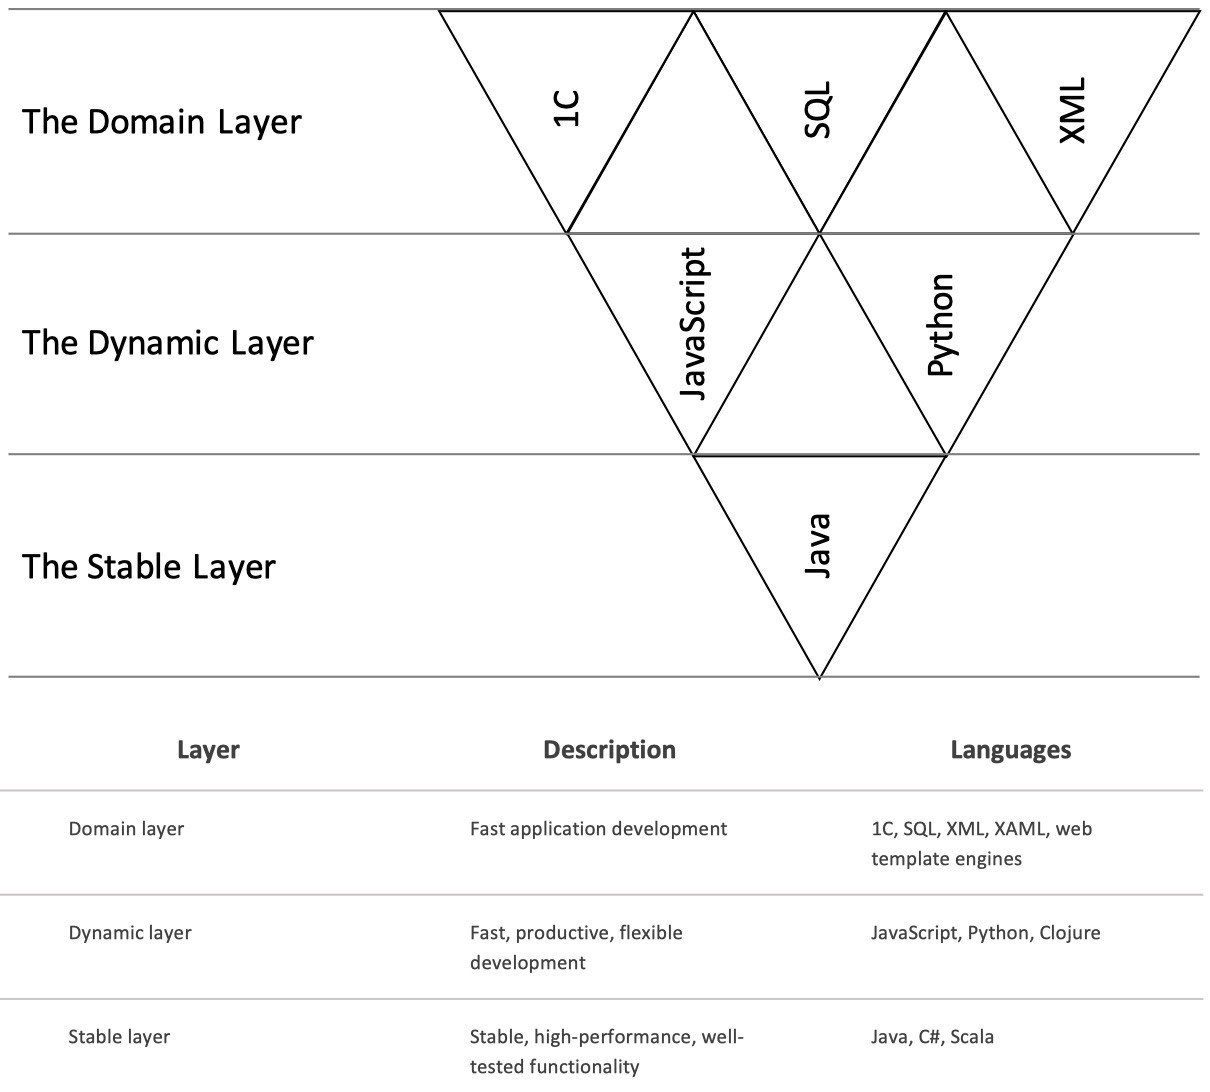 Figure 1. Programming languages classification according to Bini fractal programming pyramid